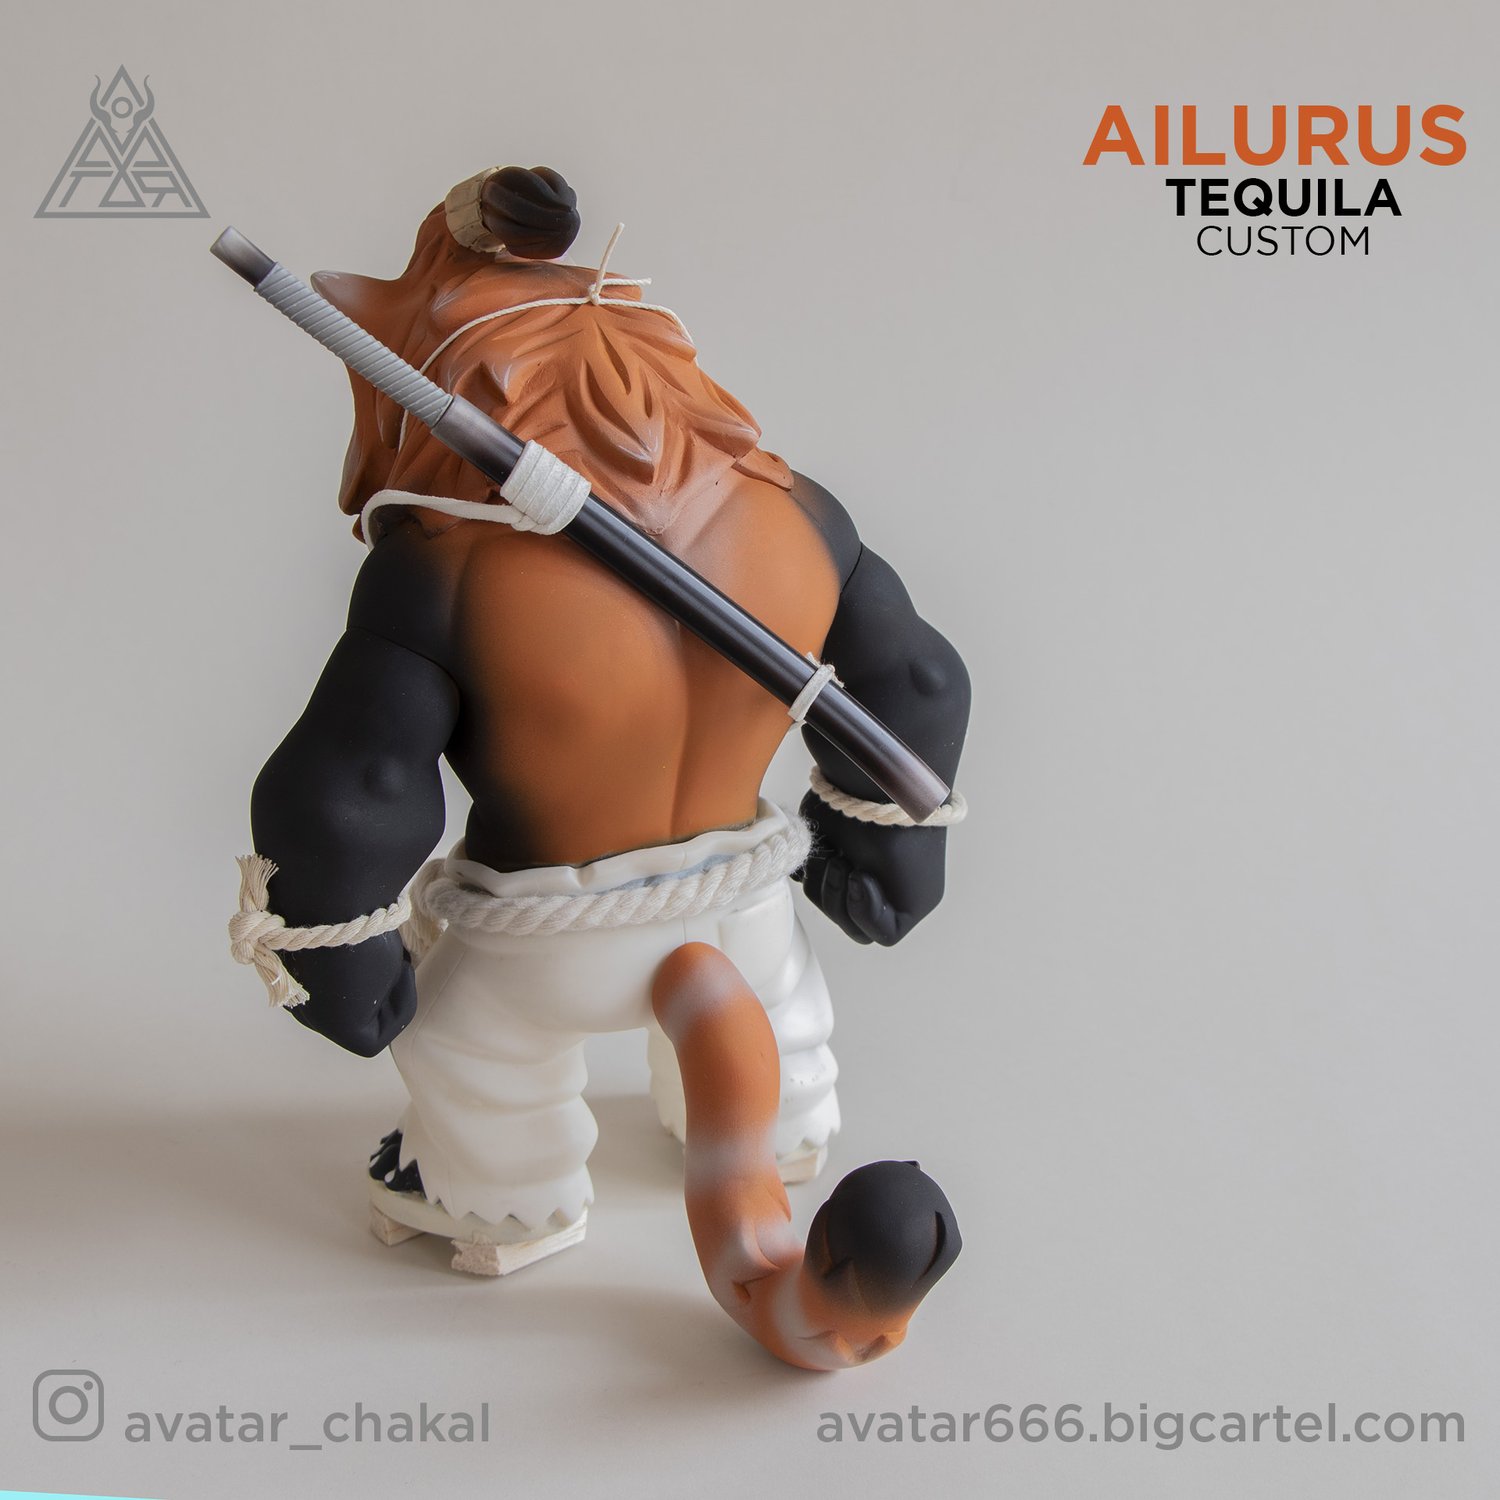 Image of Ailurus